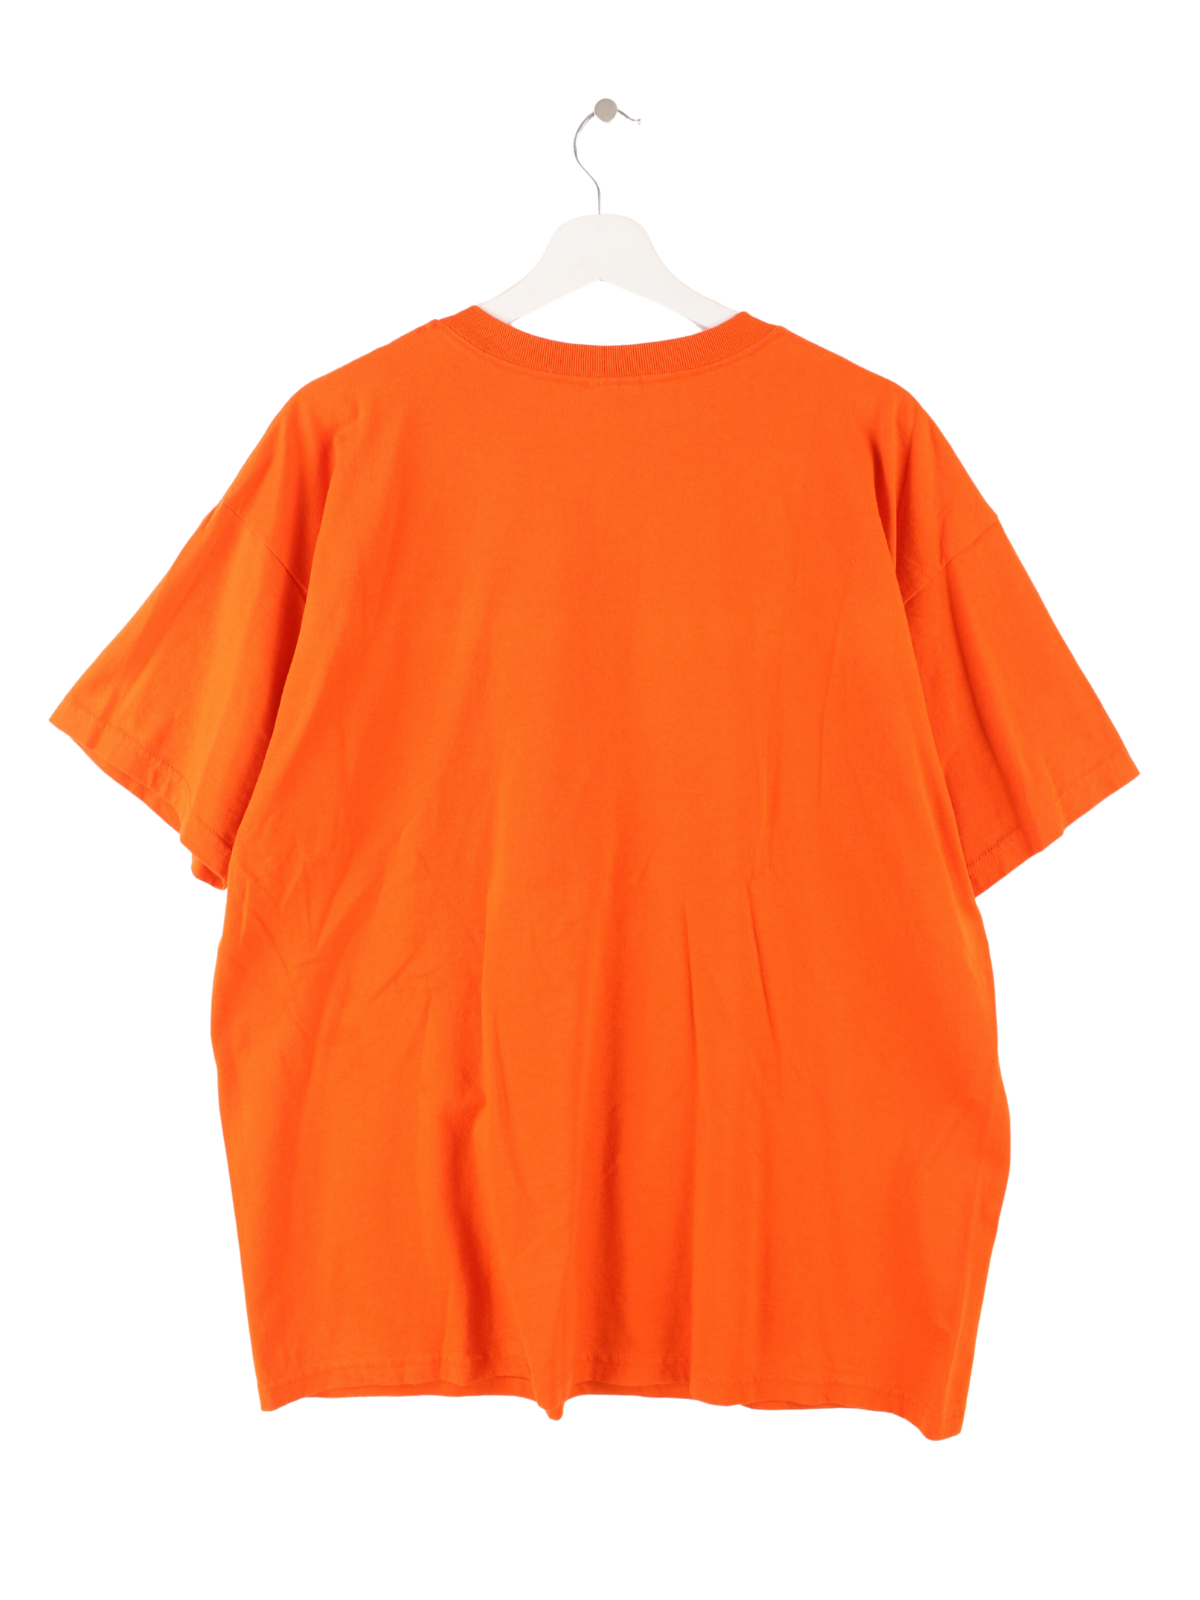 Fruit of the Loom Football Print T-Shirt Orange XL